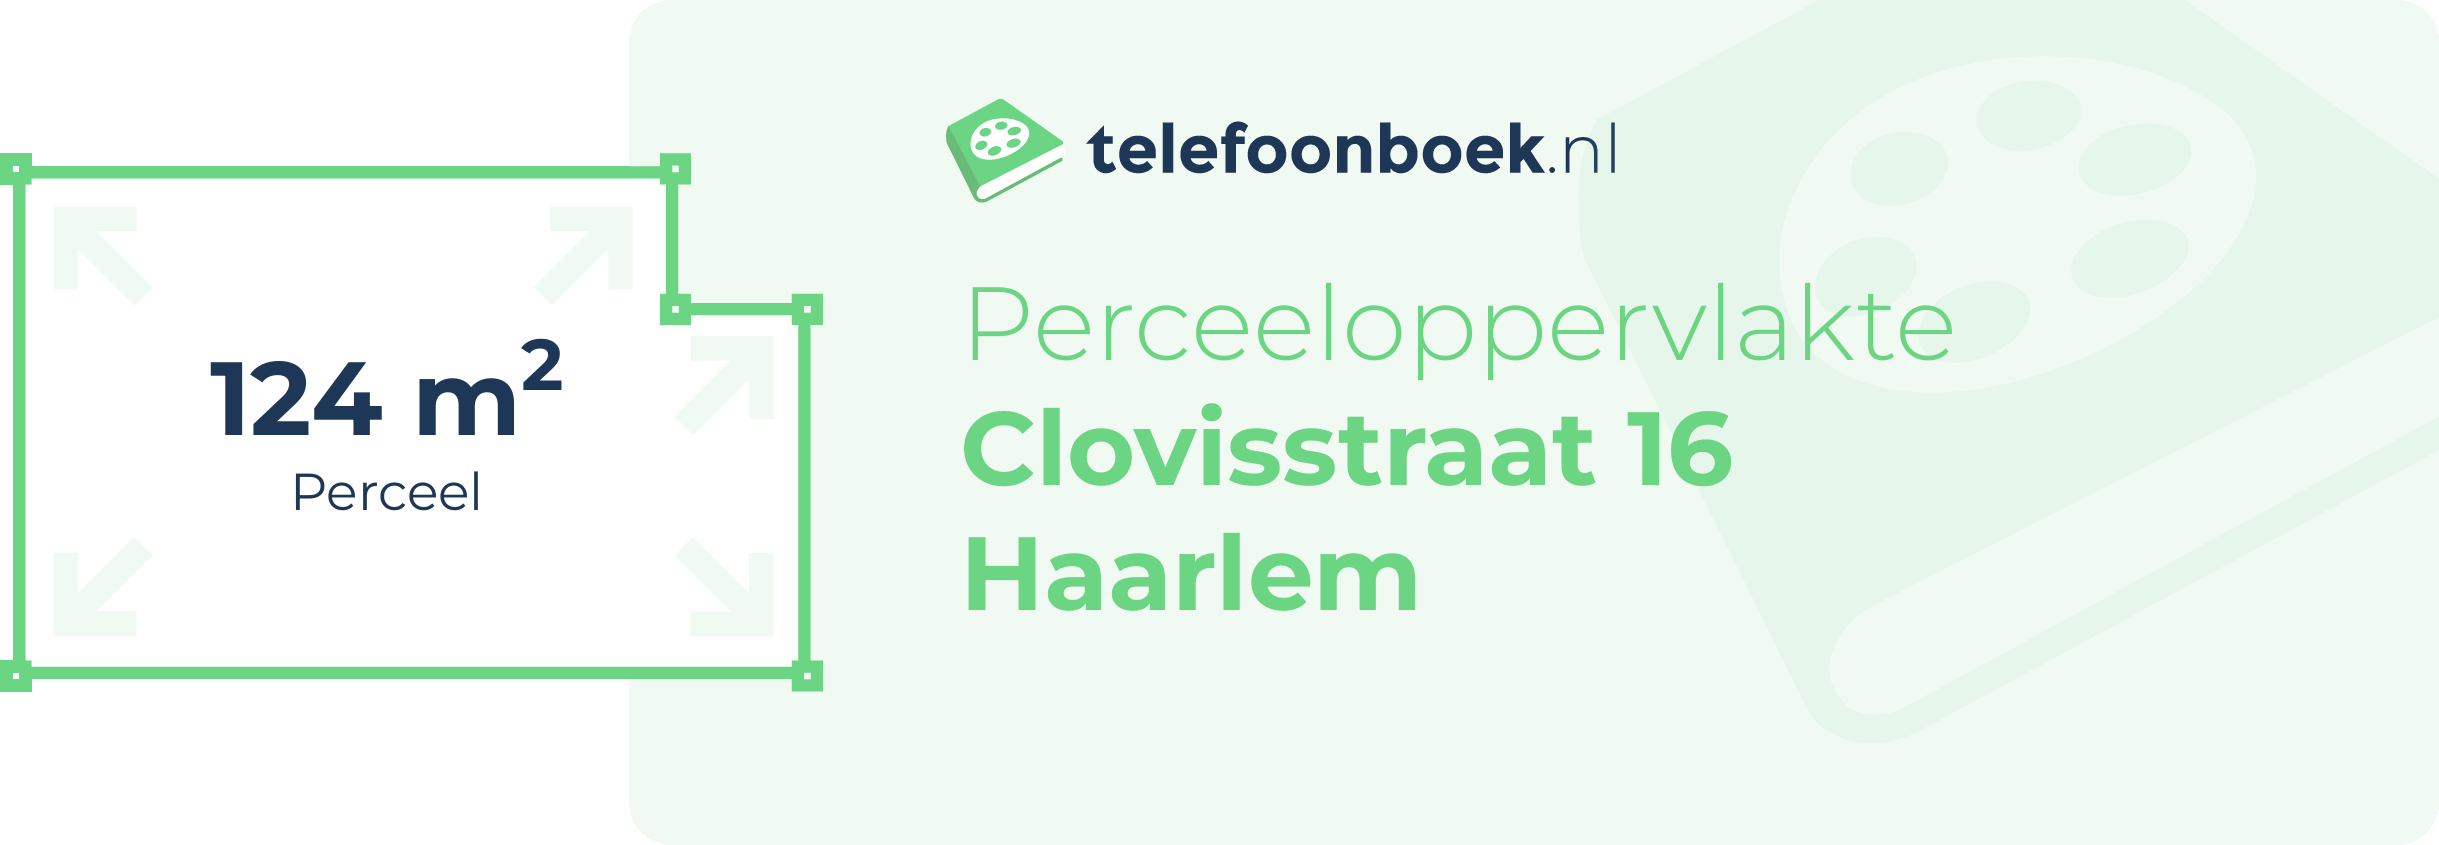 Perceeloppervlakte Clovisstraat 16 Haarlem